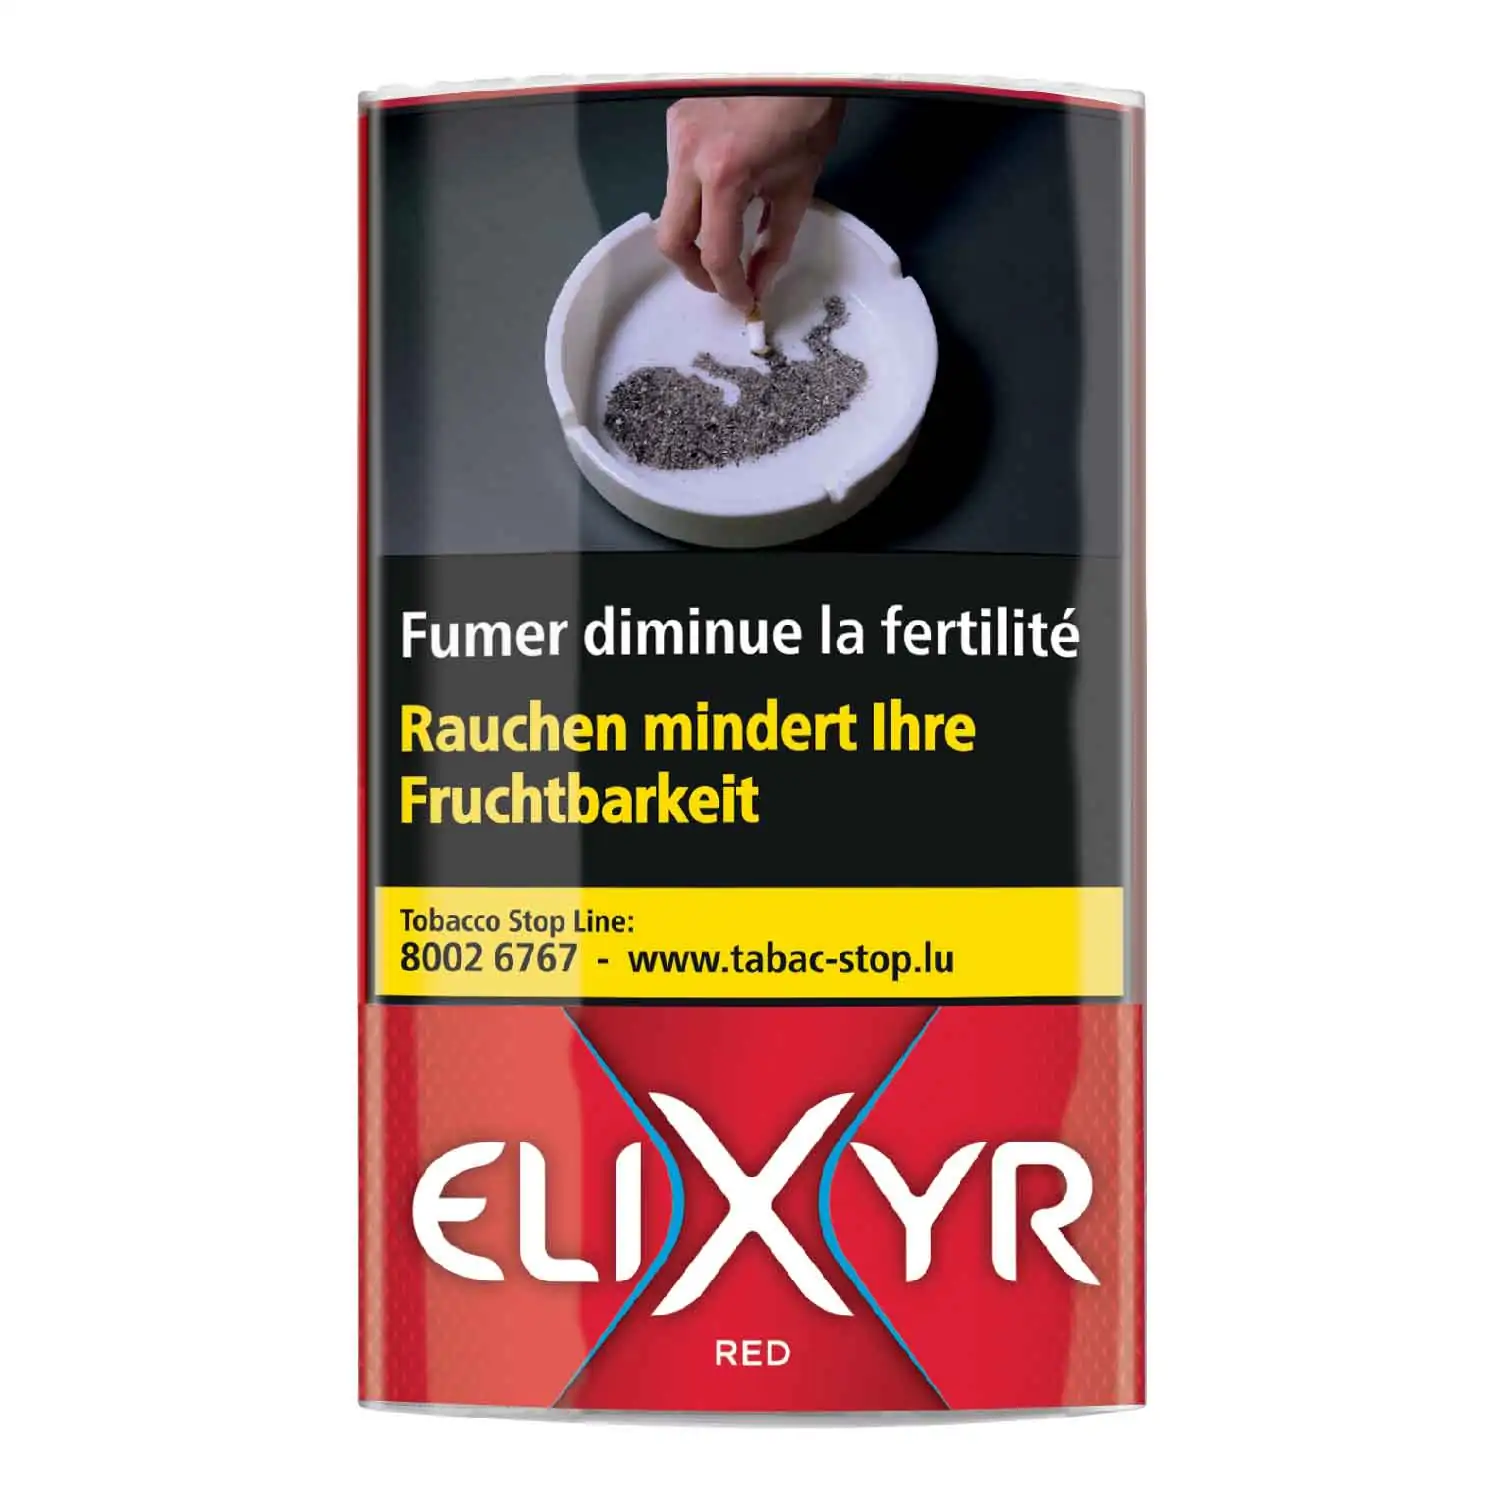 Elixyr original red 30g - Buy at Real Tobacco